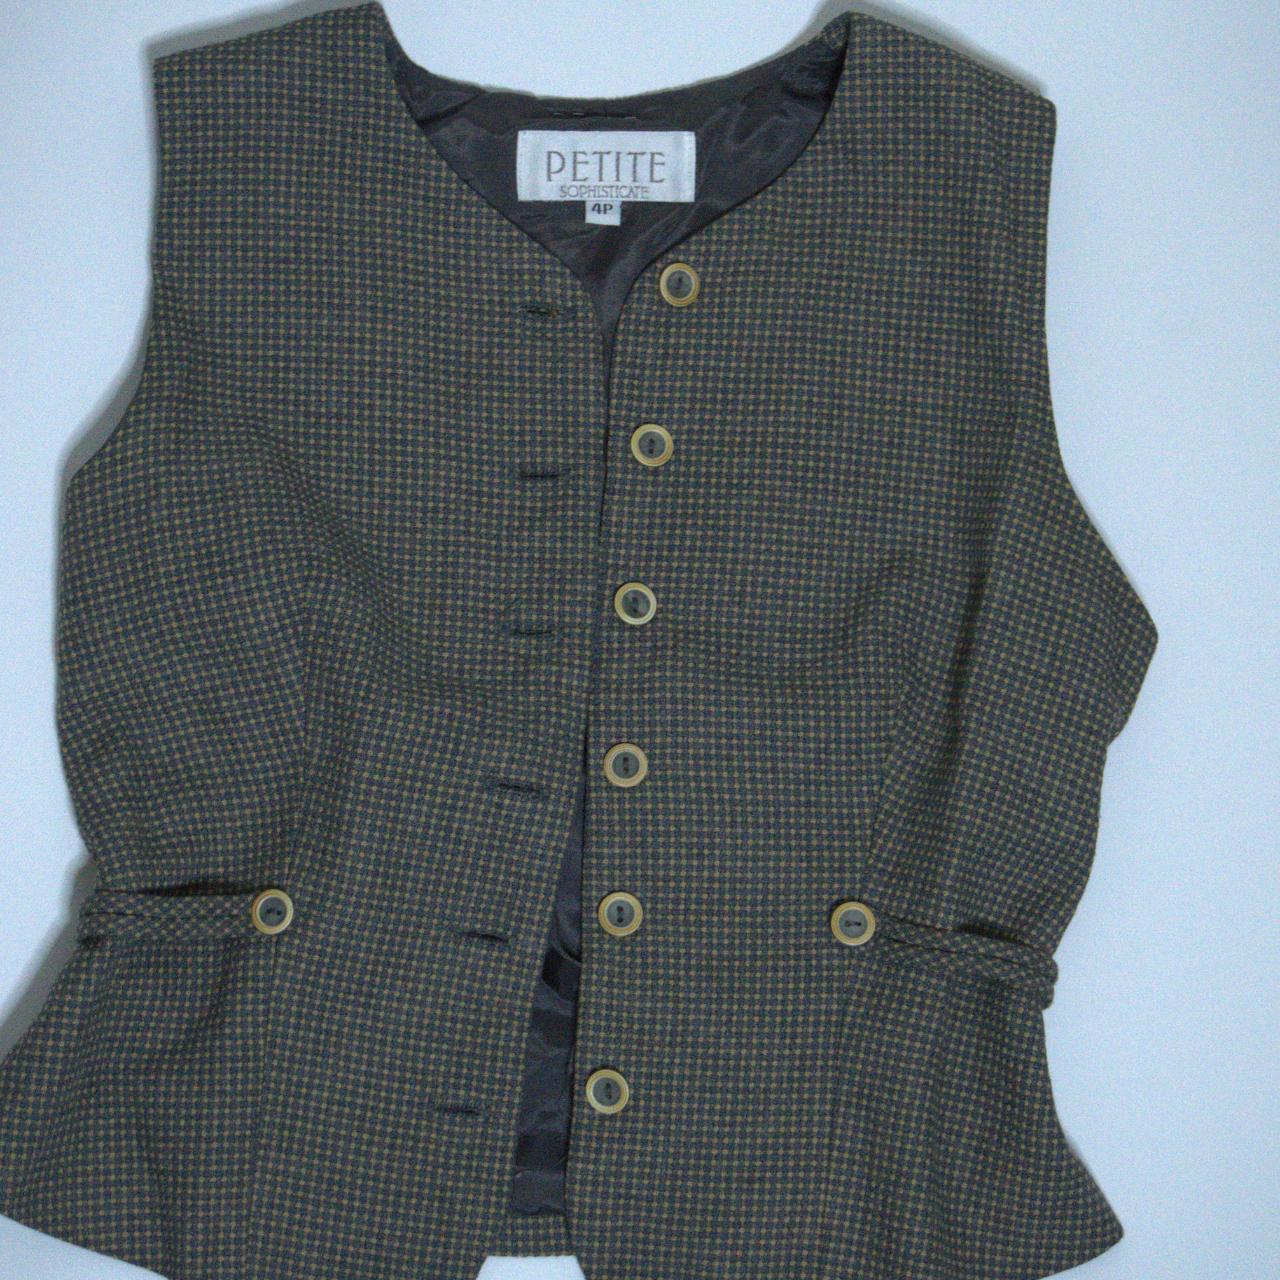 Vintage Petite Sophisticate Vest - All buttons work... - Depop